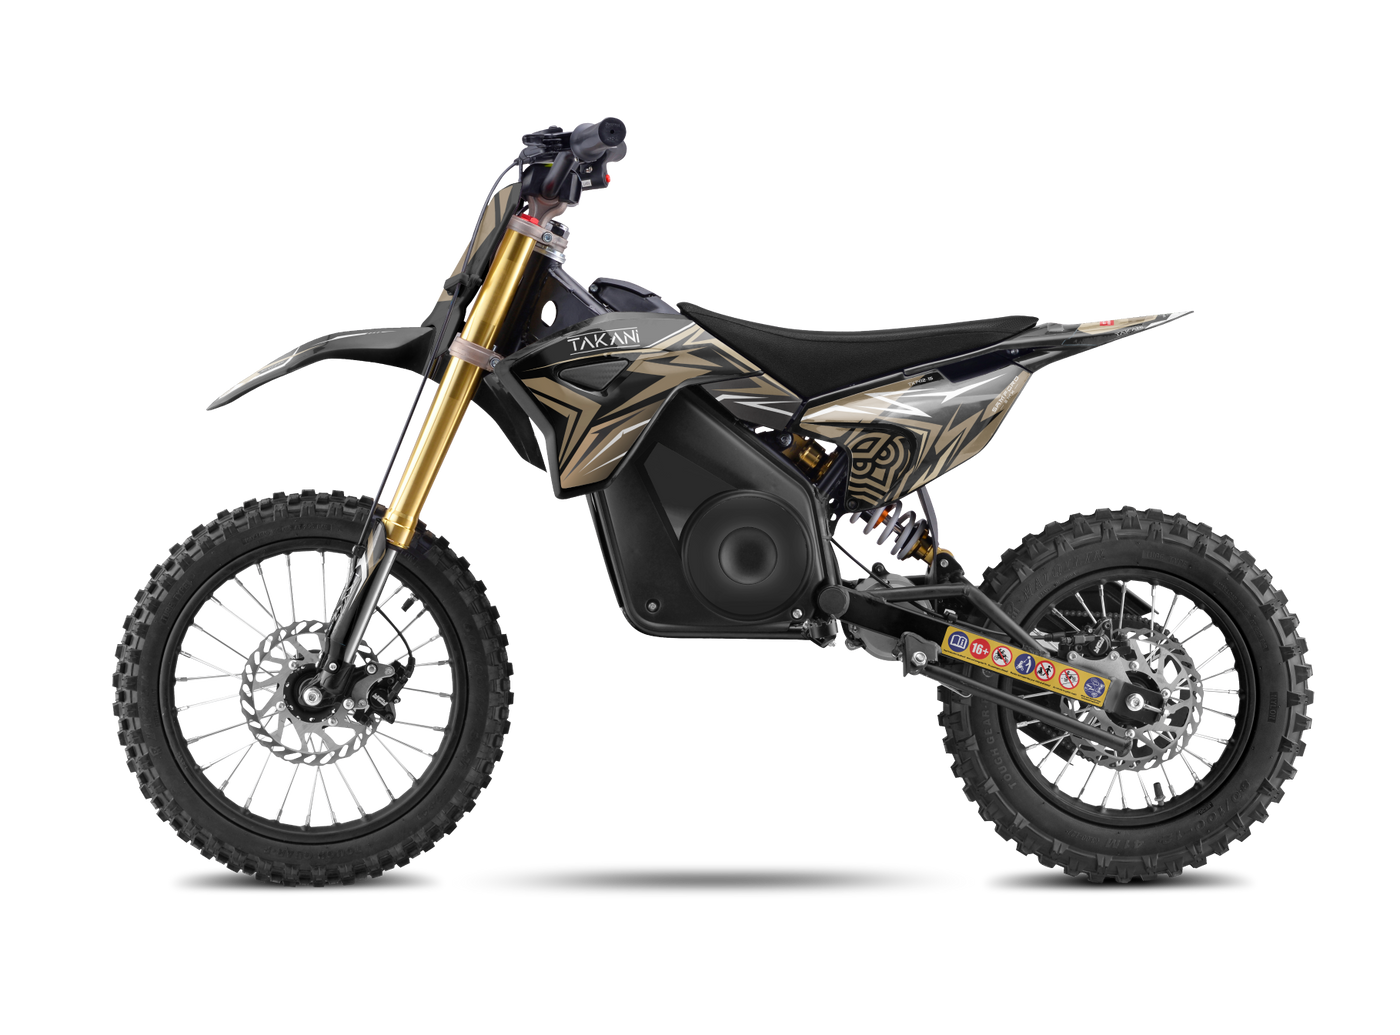 TAKANI 1300W electric motocross bike for kids, this MIDI electric dirt bike is the perfect beginner bike for motocross beginners.